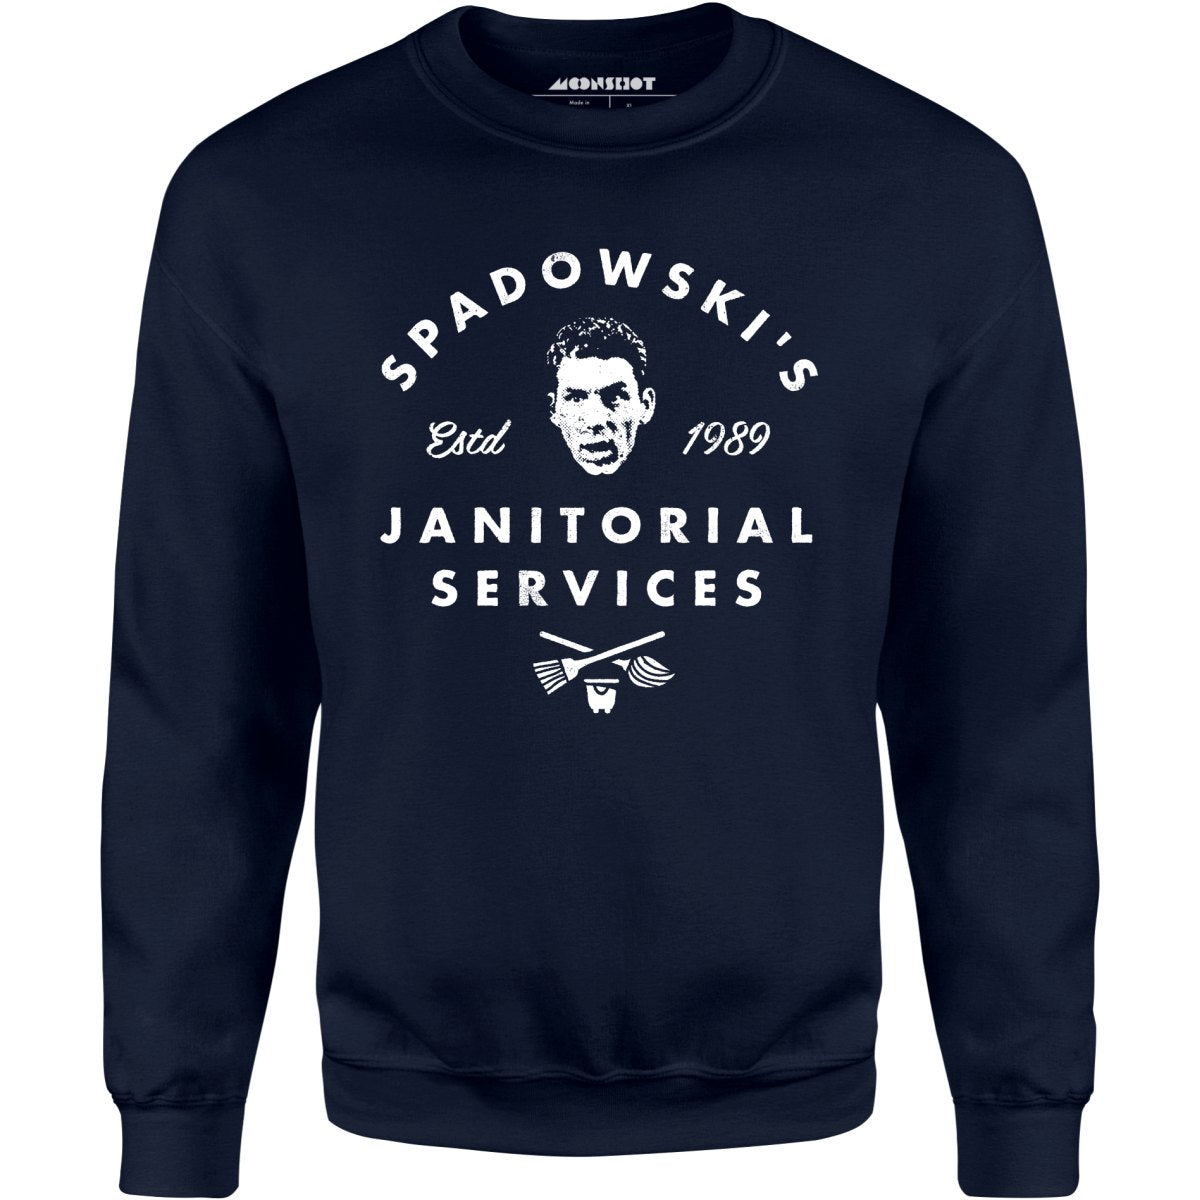 UHF Spadowski's Janitorial Services - Unisex Sweatshirt